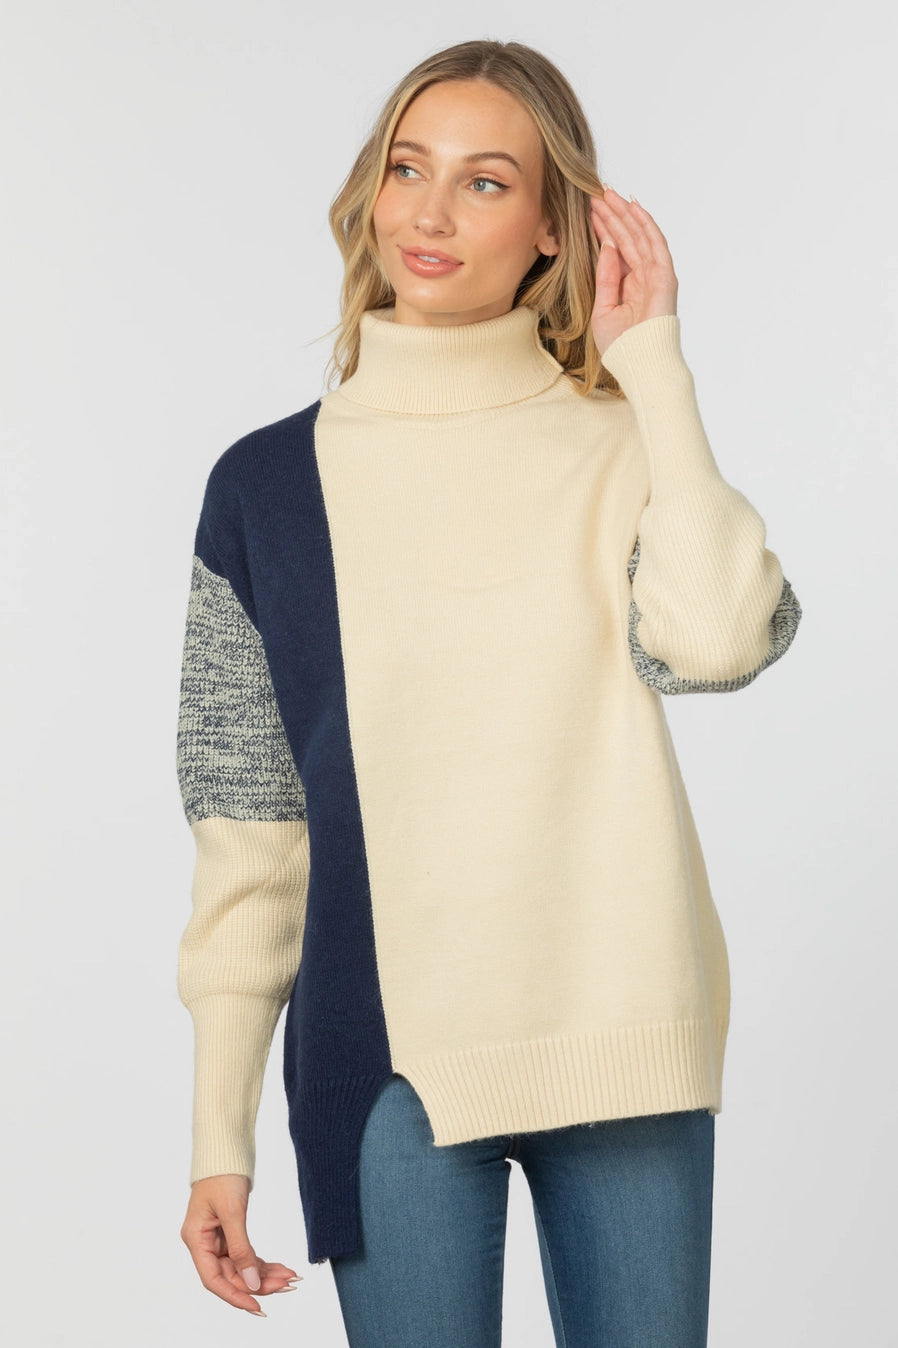 Navy & Camel Colorblock Sweater